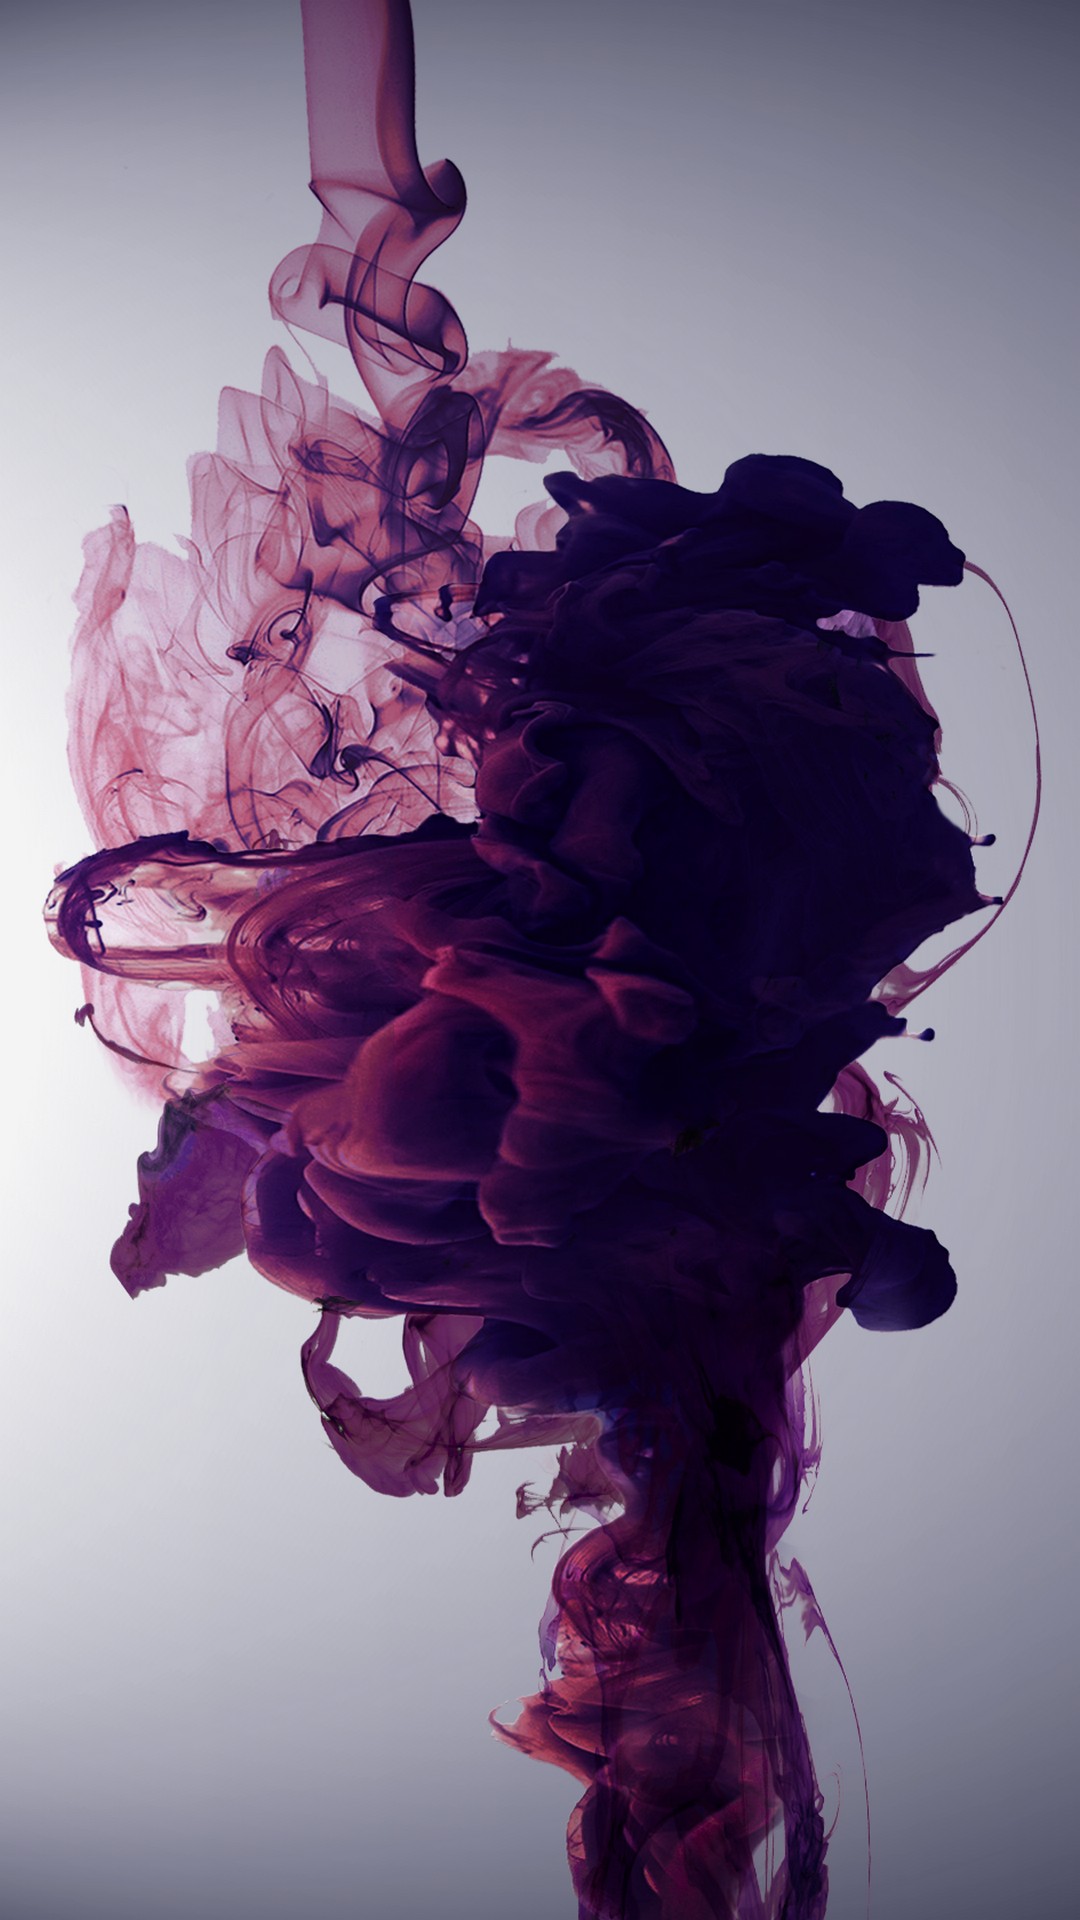 HD Purple Liquid Wallpaper For iPhone resolution 1080x1920